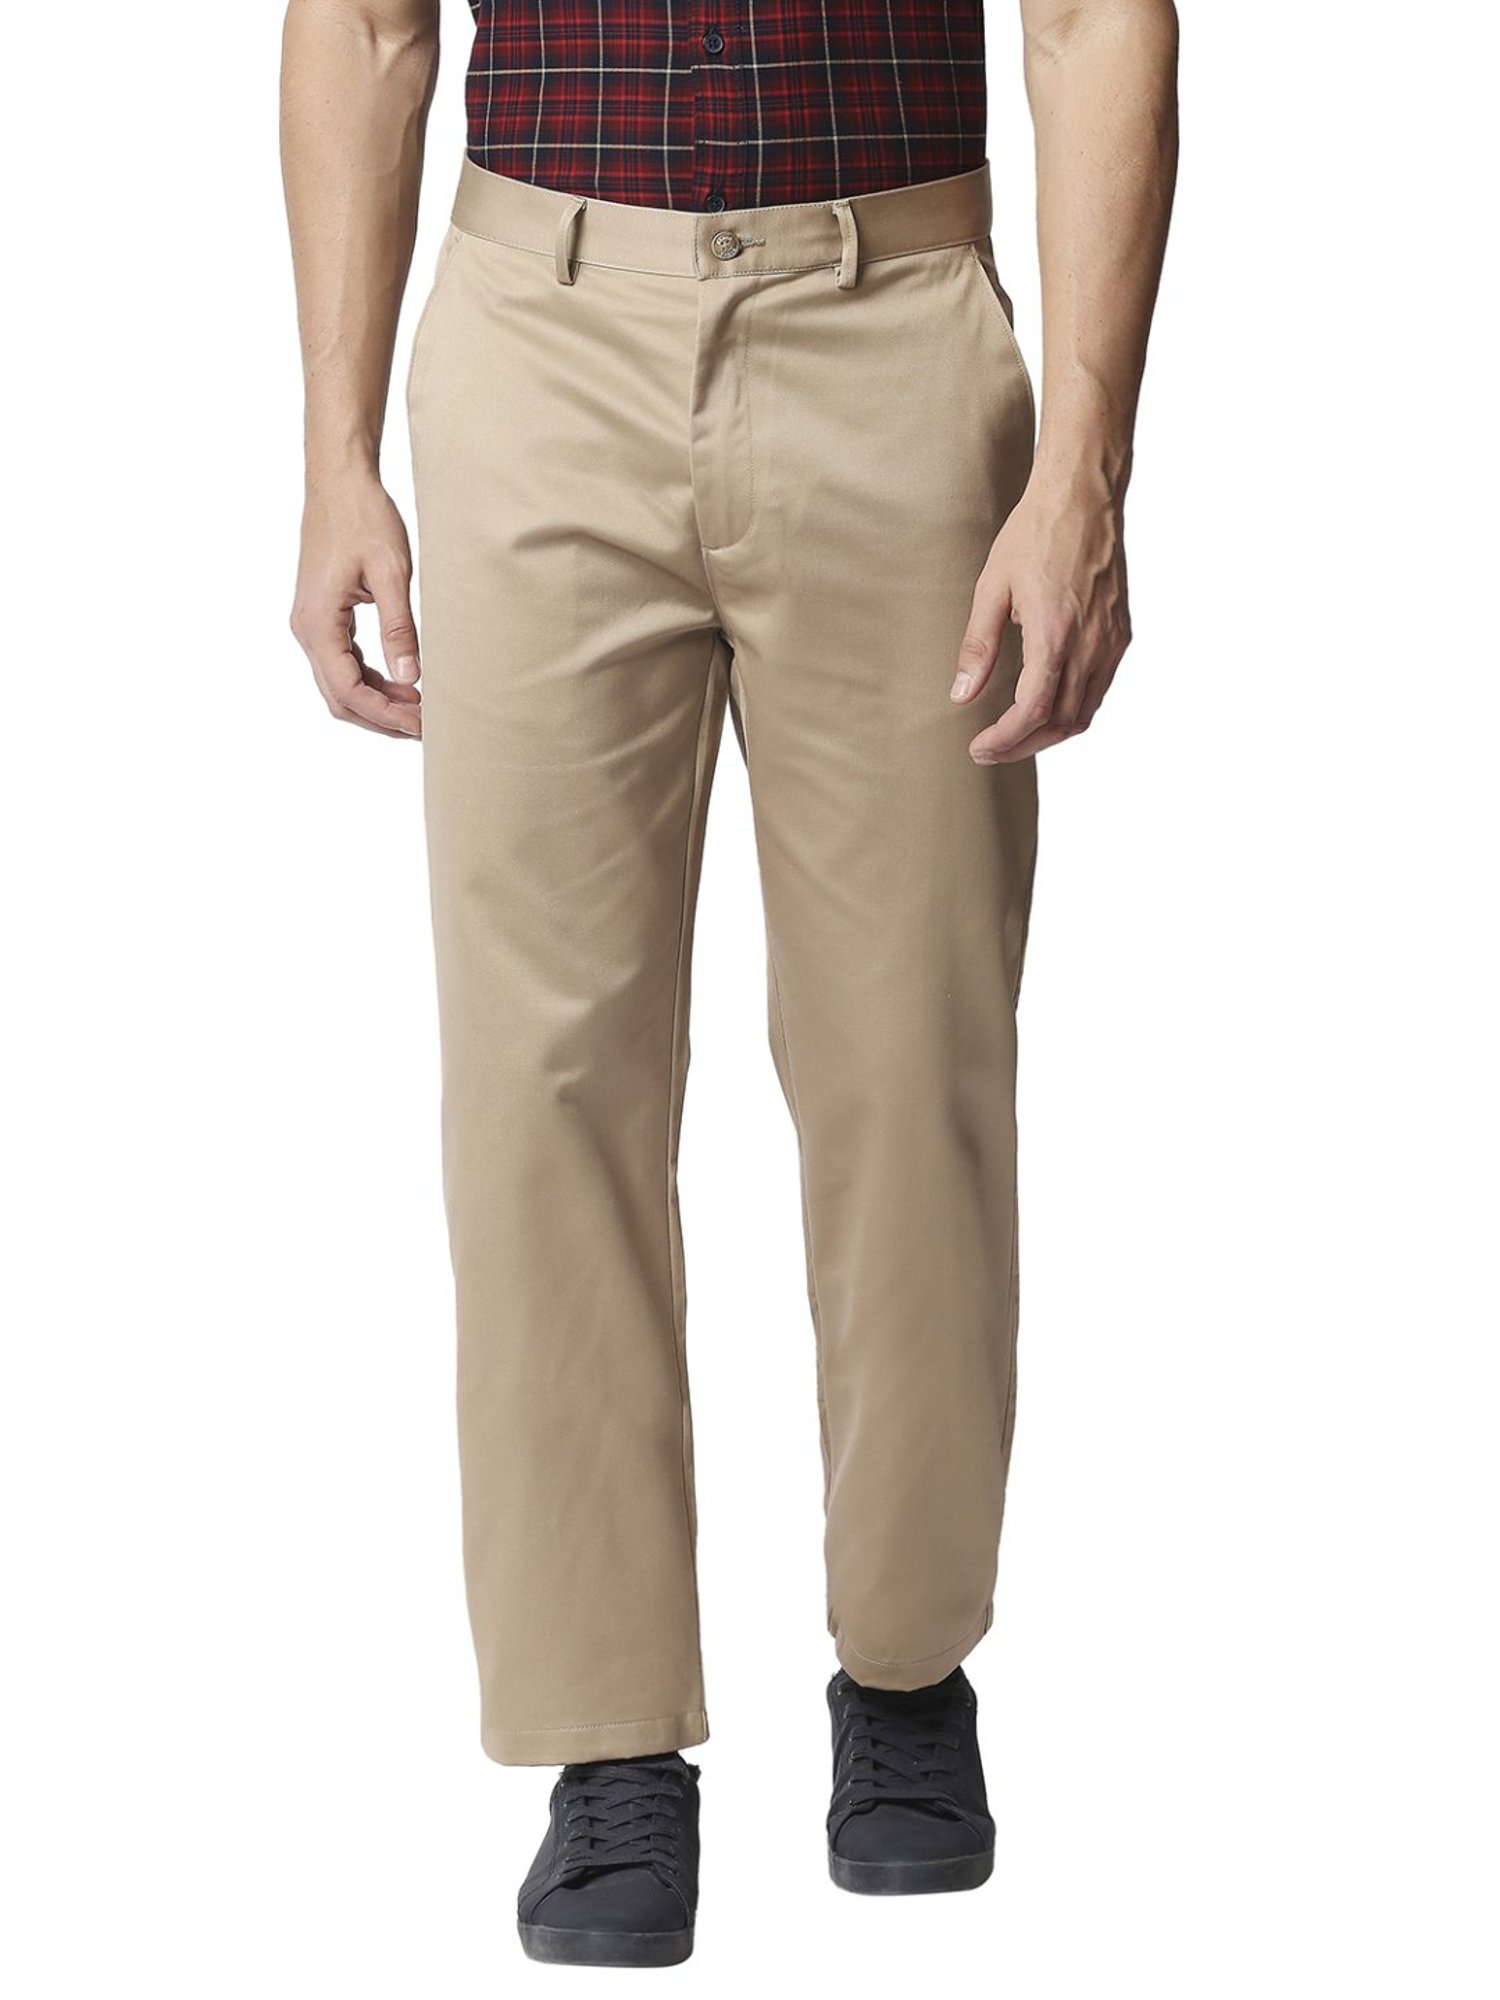 Buy Basics Brown Mid Rise Comfort Fit Trousers for Men Online  Tata CLiQ